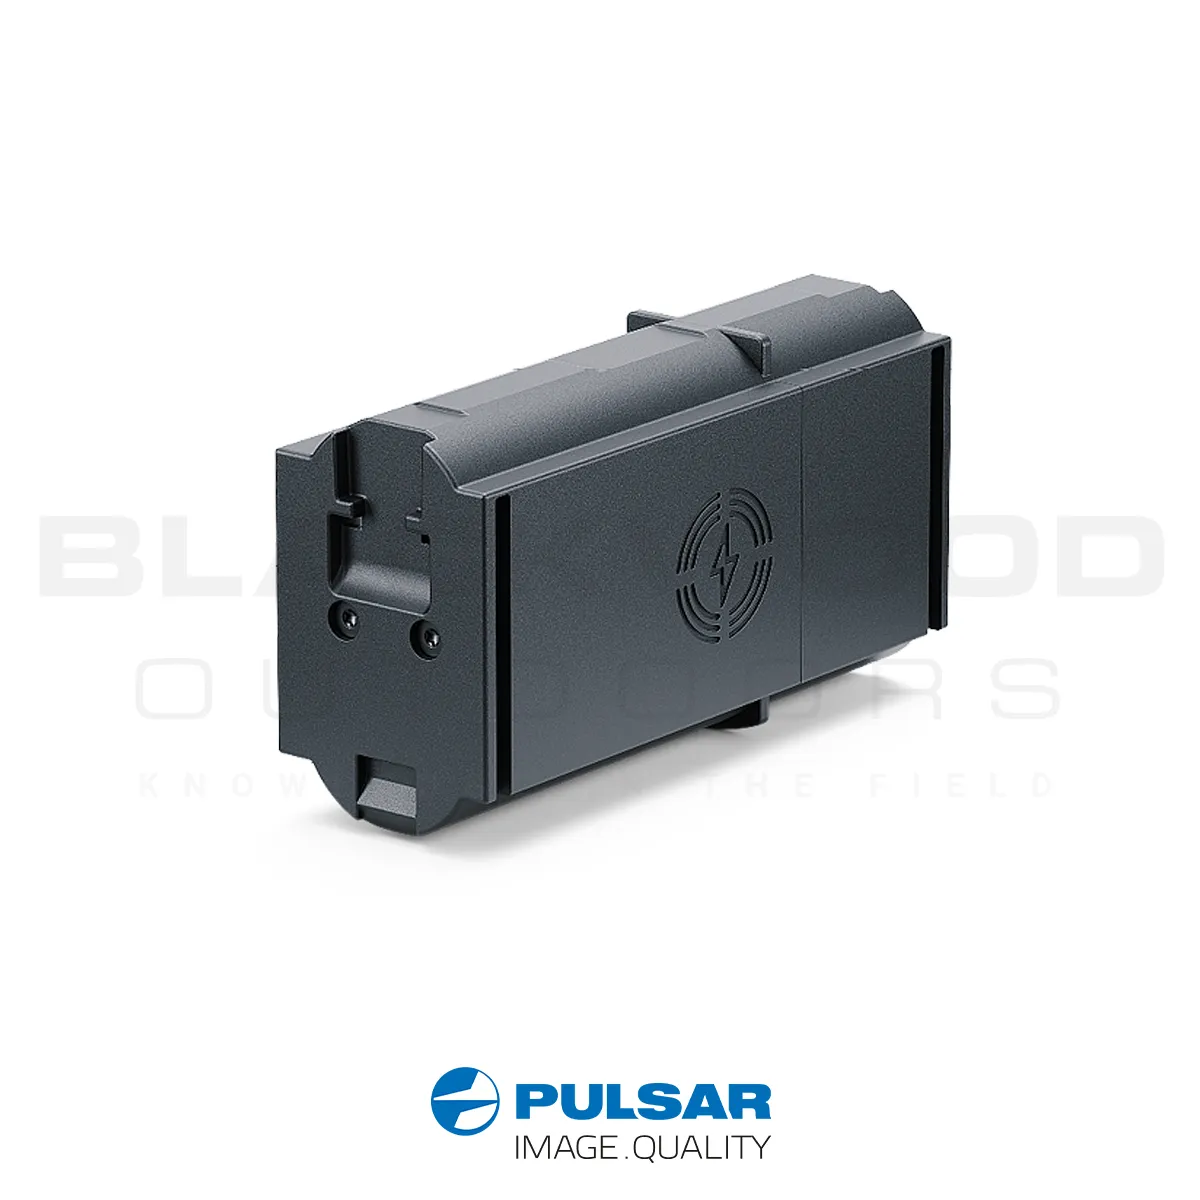 Pulsar LPS7i battery cell system for Telos